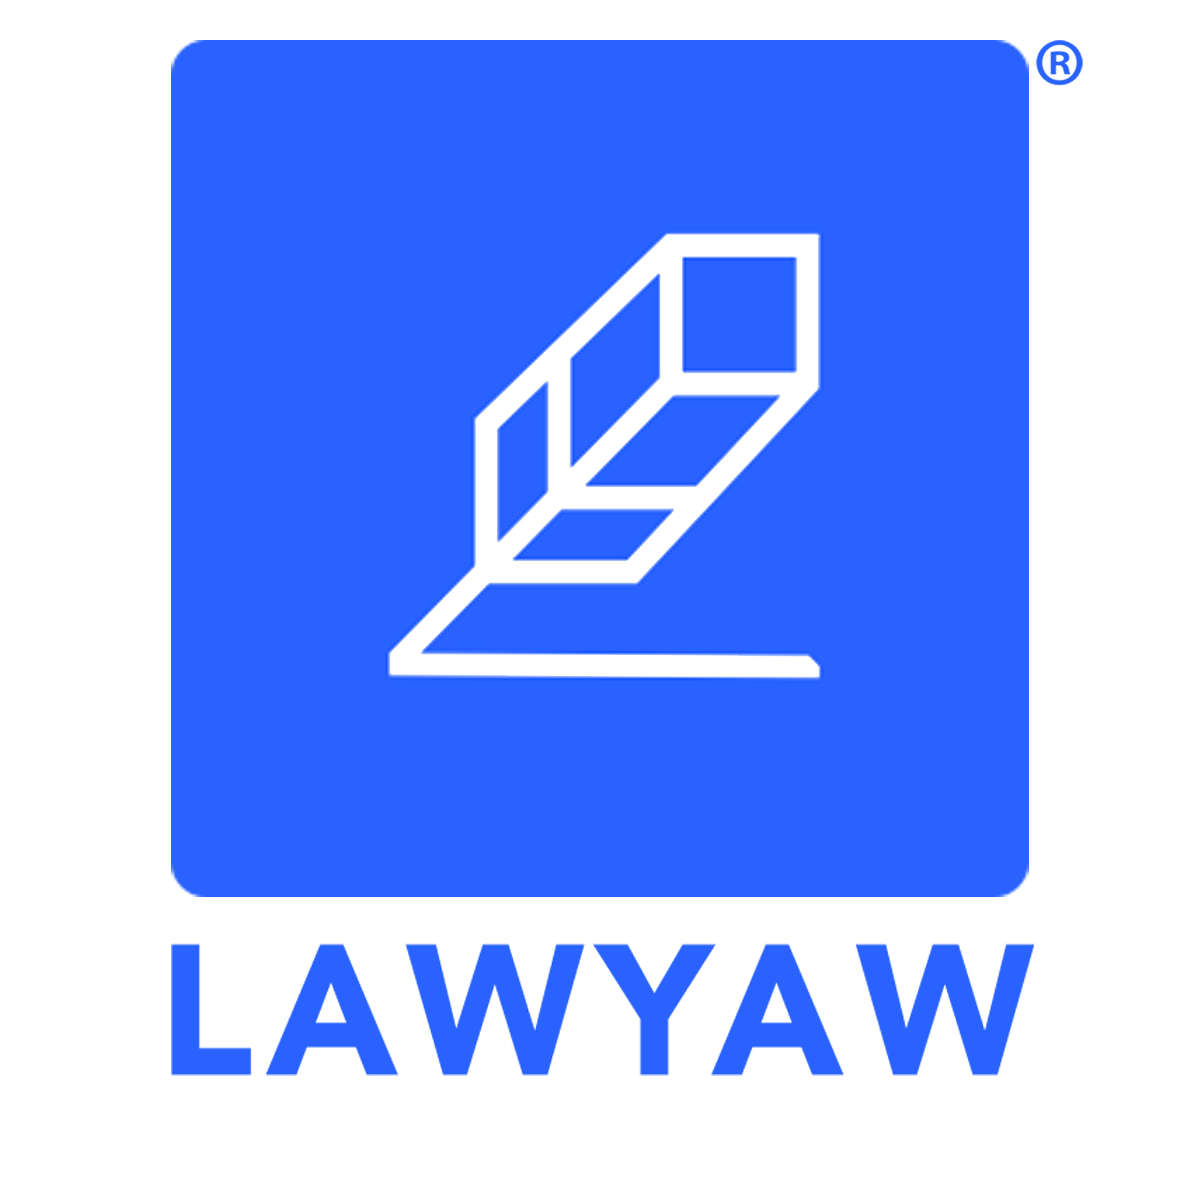 LawYaw